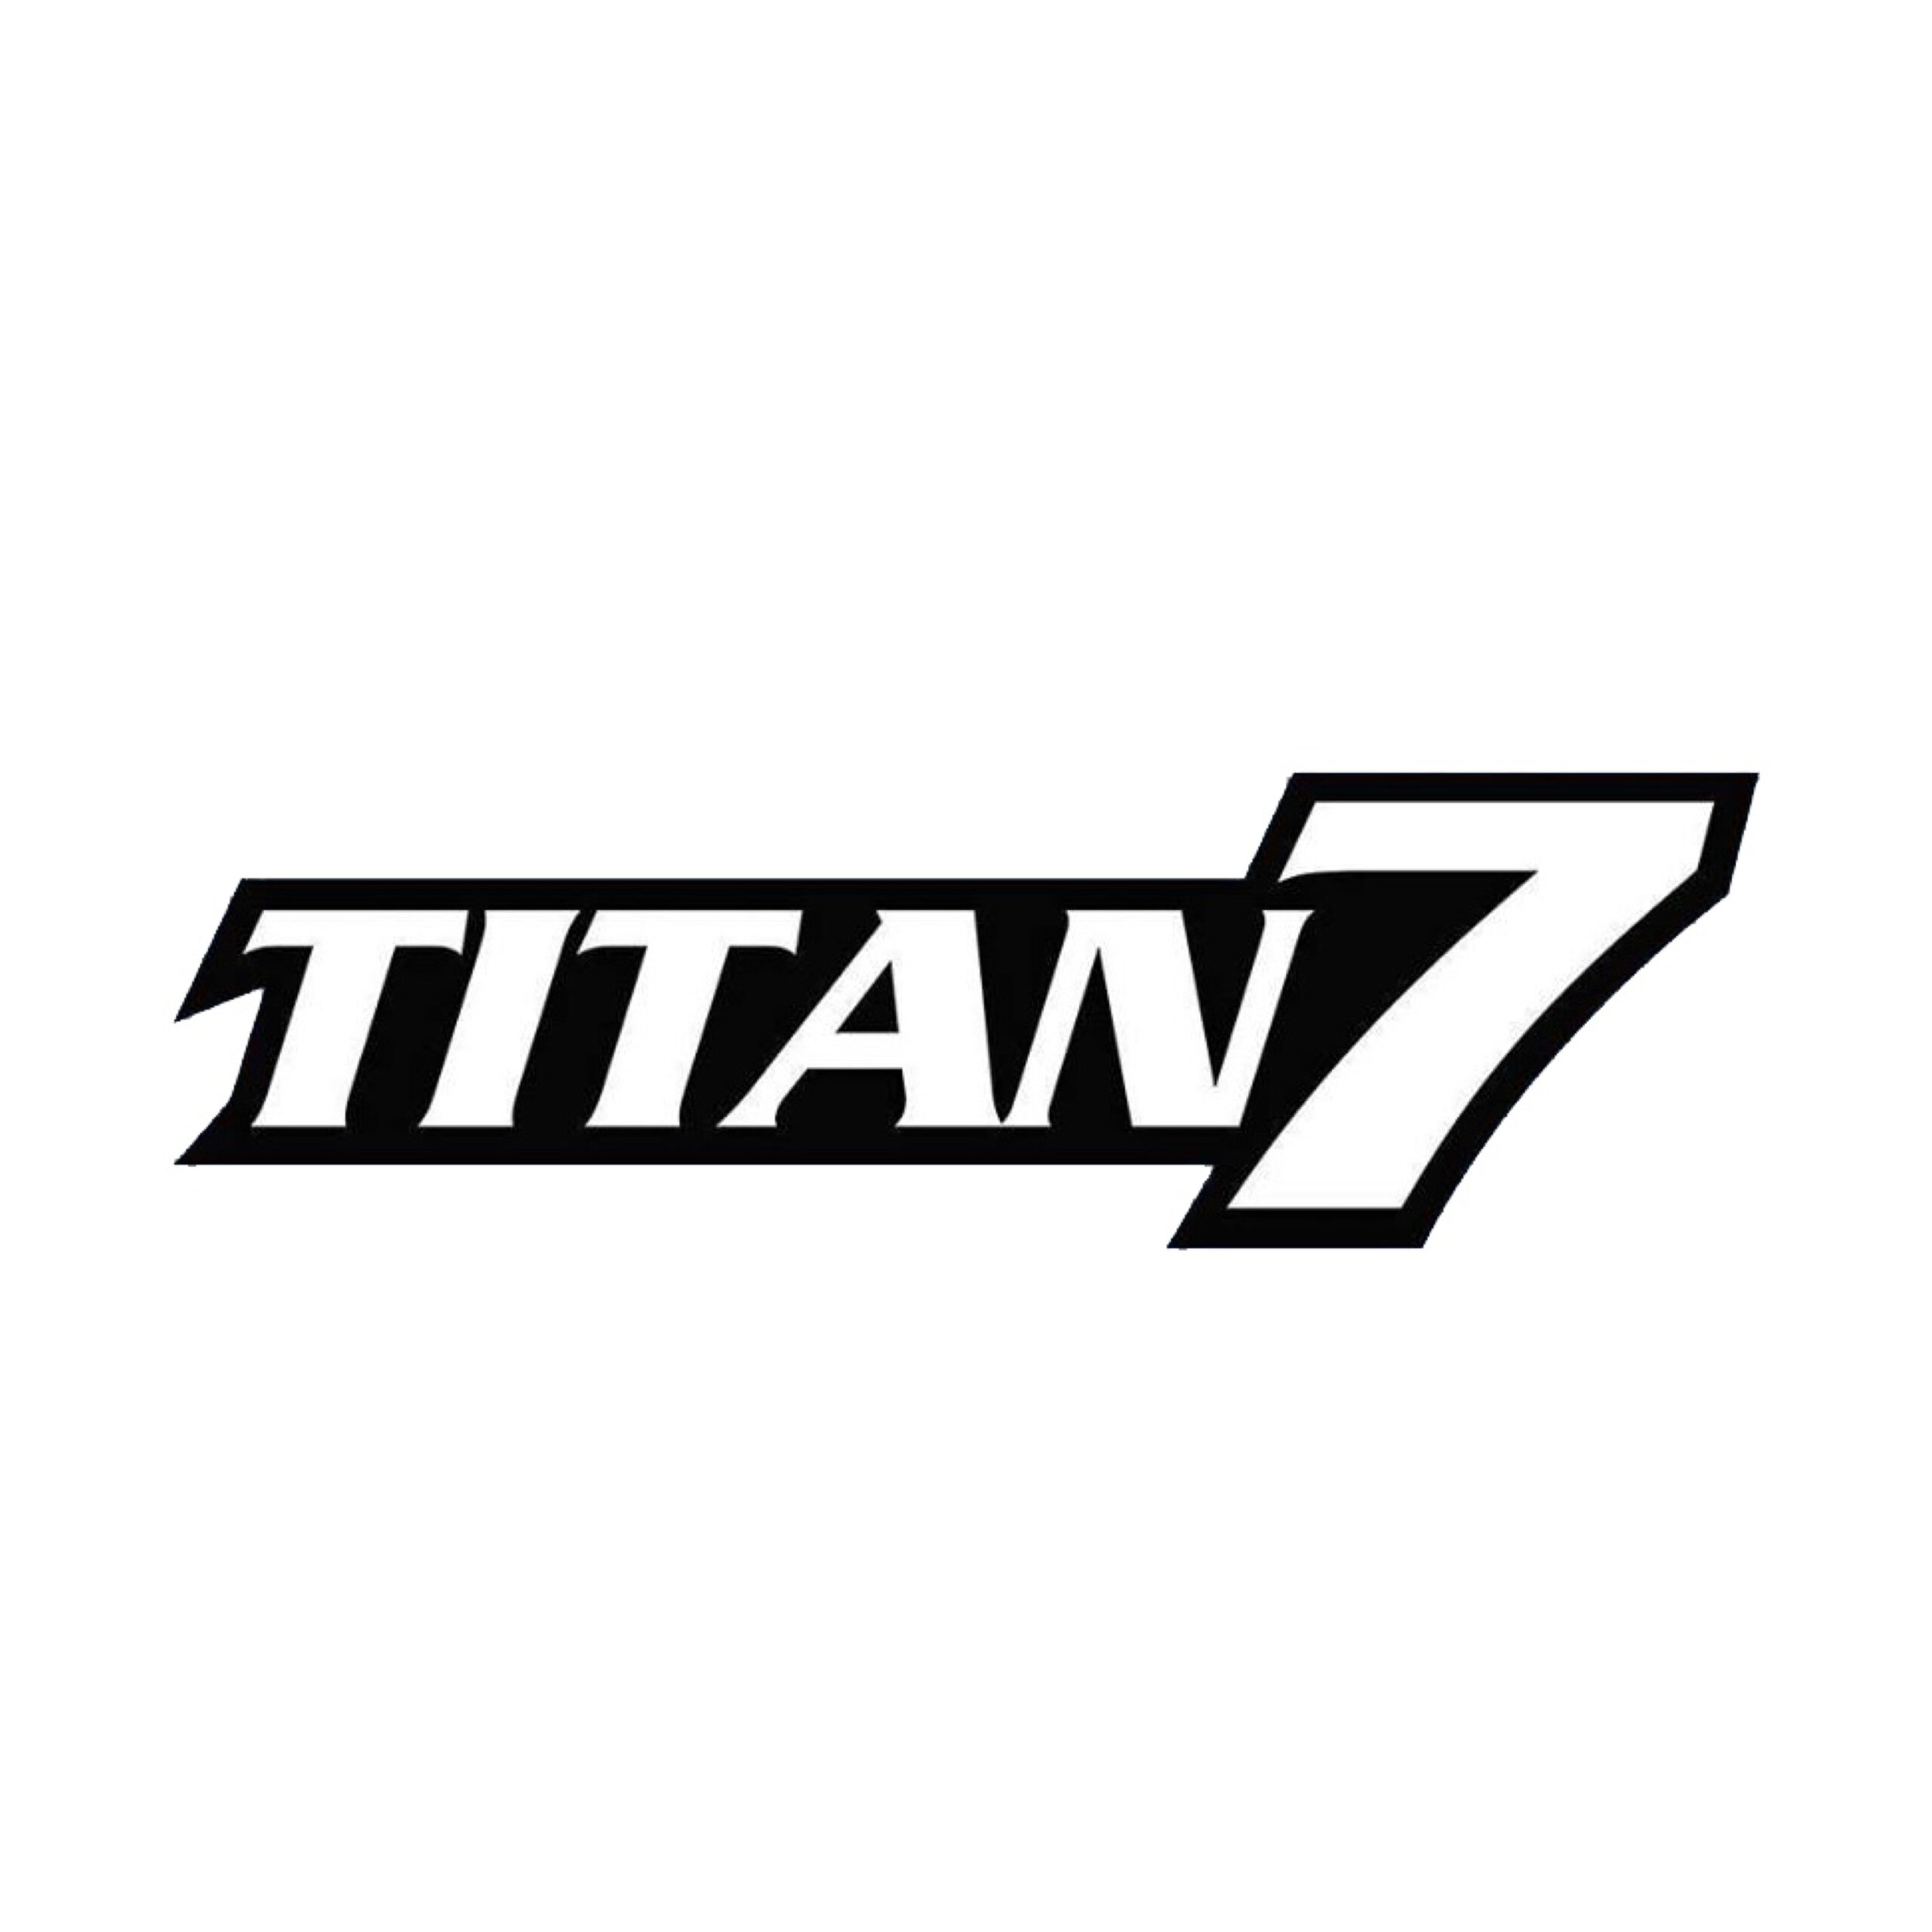 Titan7